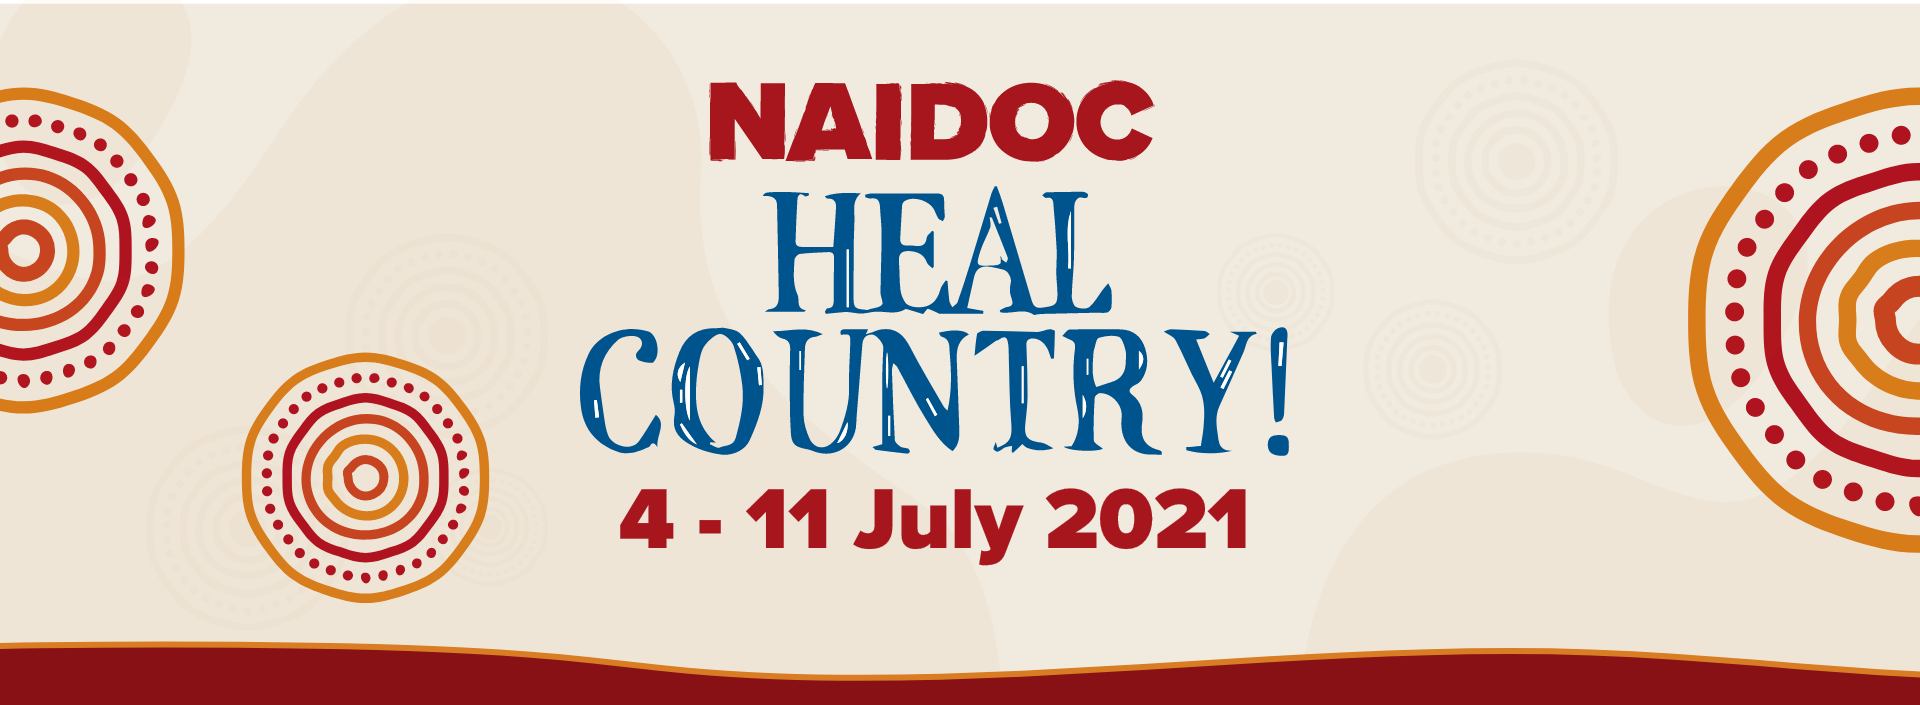 Community invited to celebrate NAIDOC Week 2021